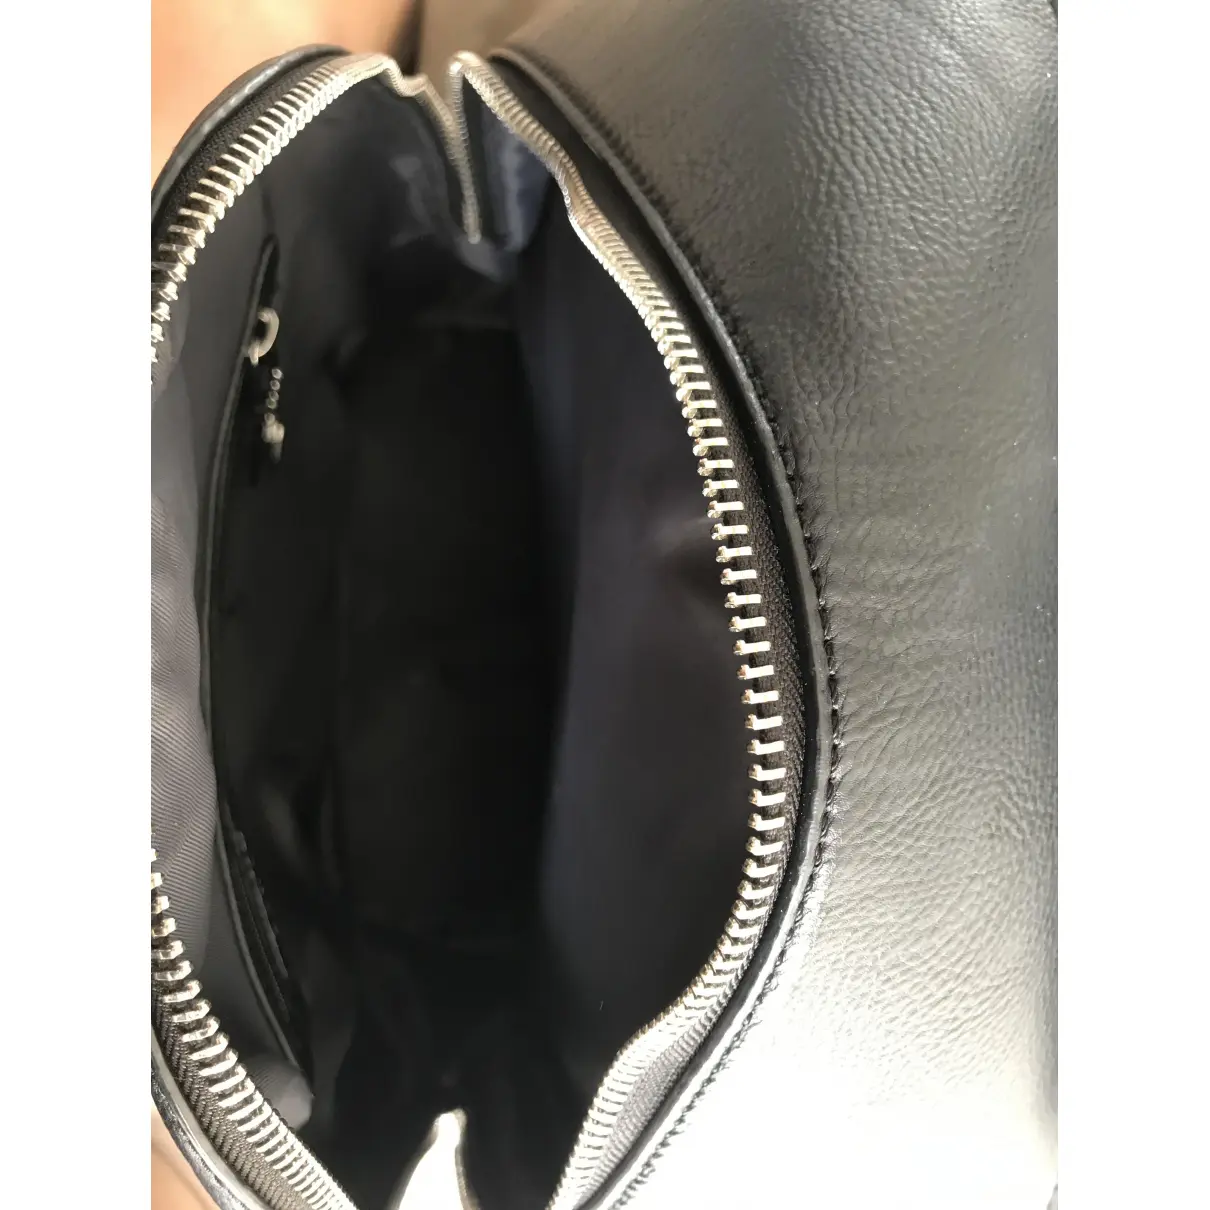 Buy Zara Vegan leather backpack online